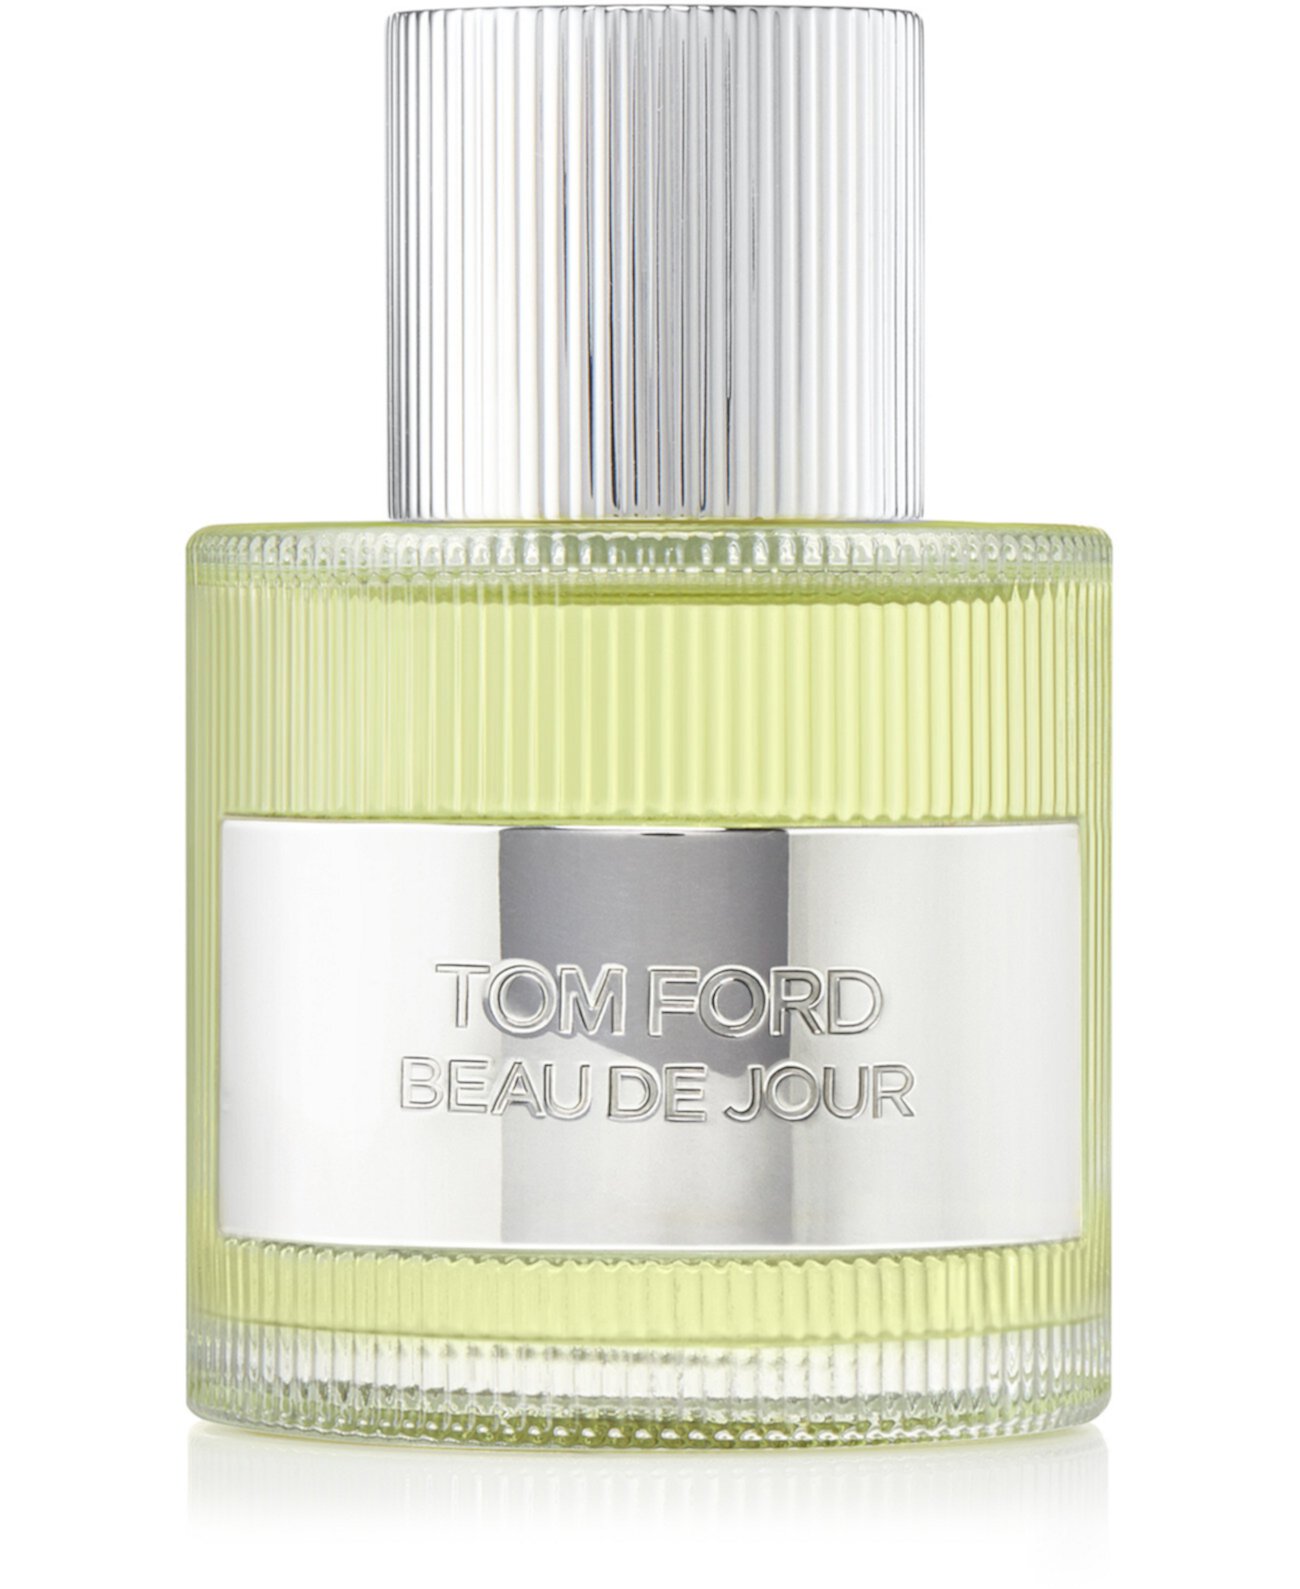 Мужская парфюмерная вода Beau de Jour, спрей, 1,7 унции. Tom Ford